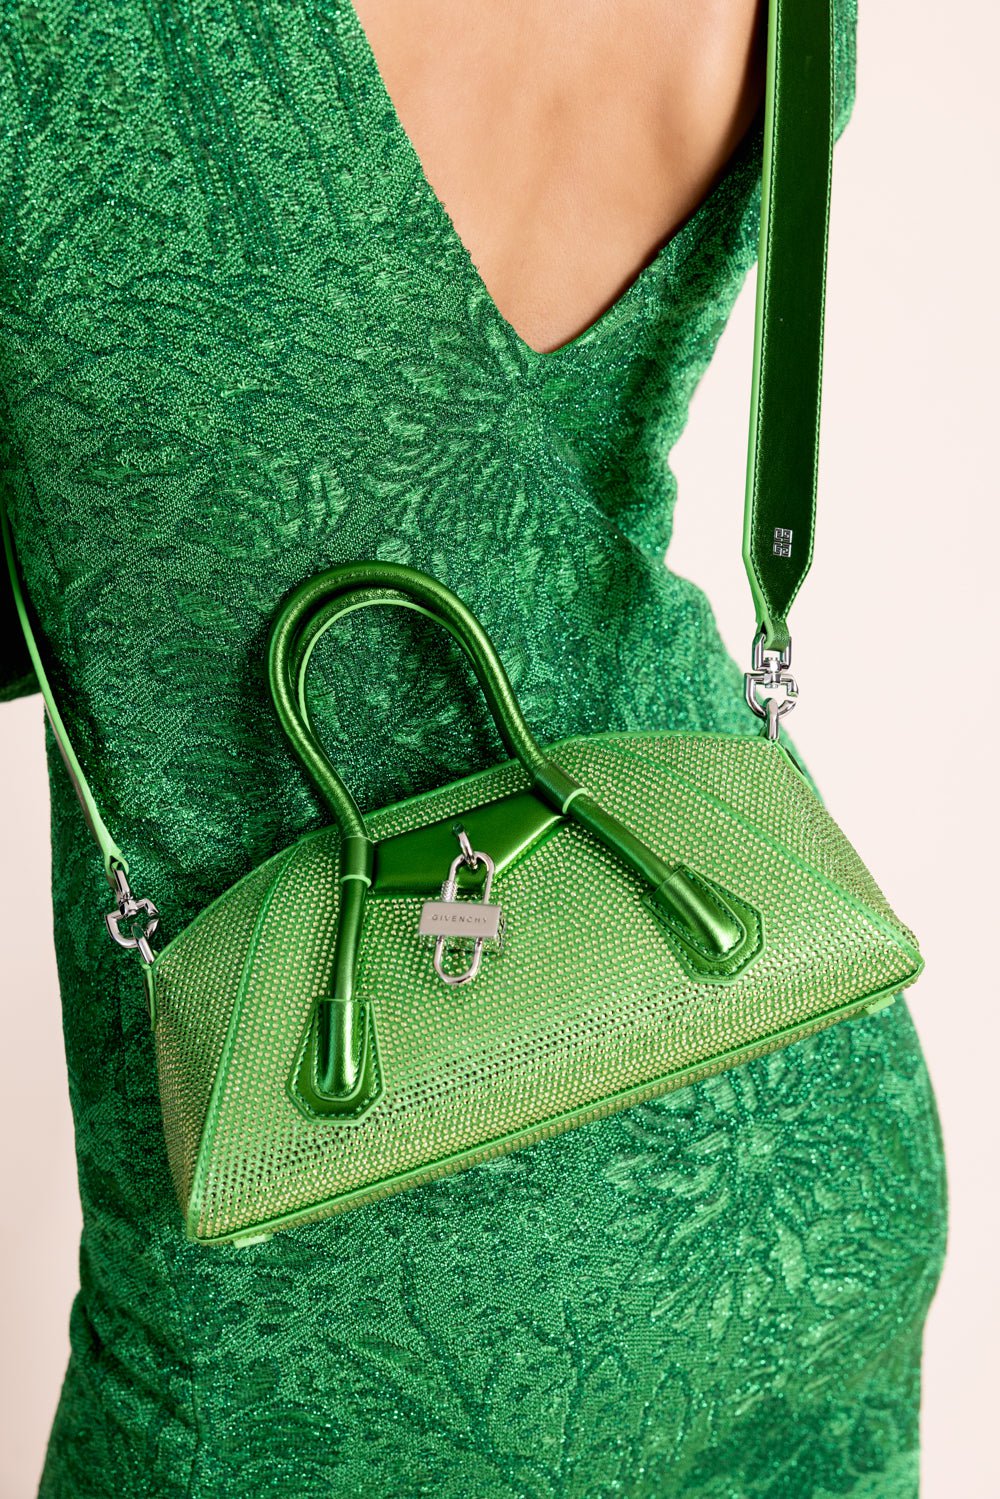 GIVENCHY-Mini Antigona Stretch Bag - Green-ABSYNTHE GREEN